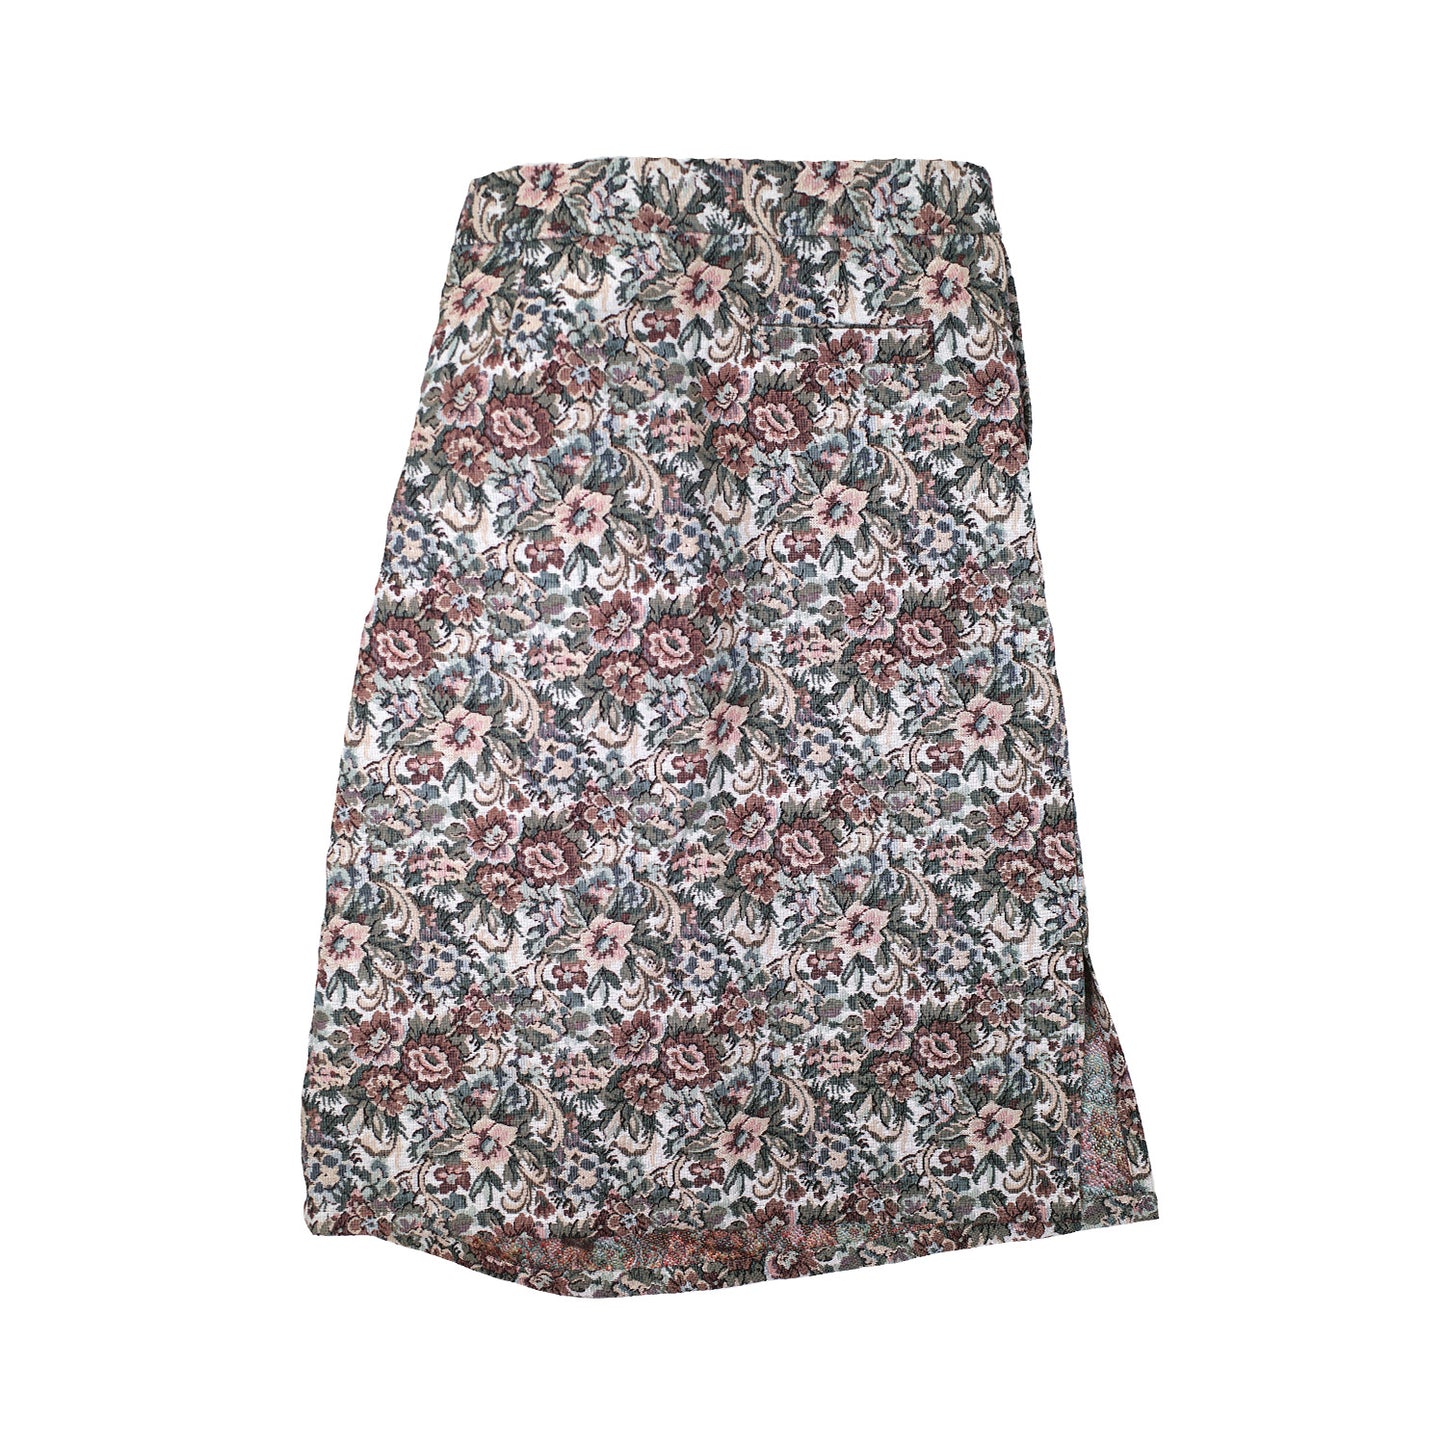 Nº75 SMLXL Skirt Flower Beige